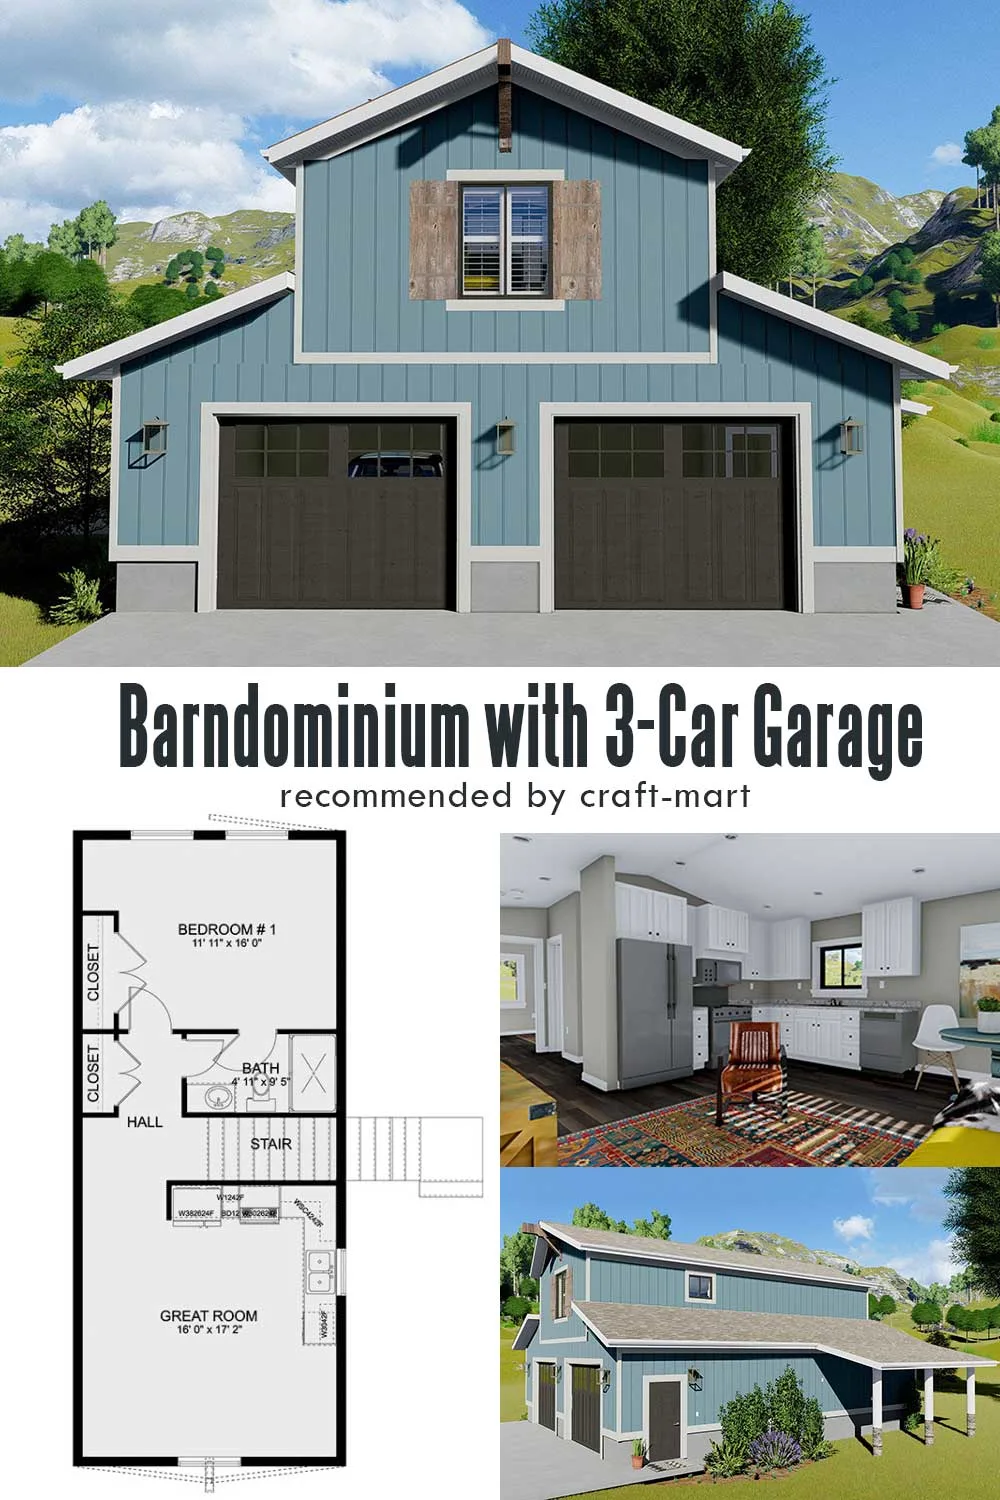 1-Bedroom Barndominium with 3-Car Garage on Ground Level